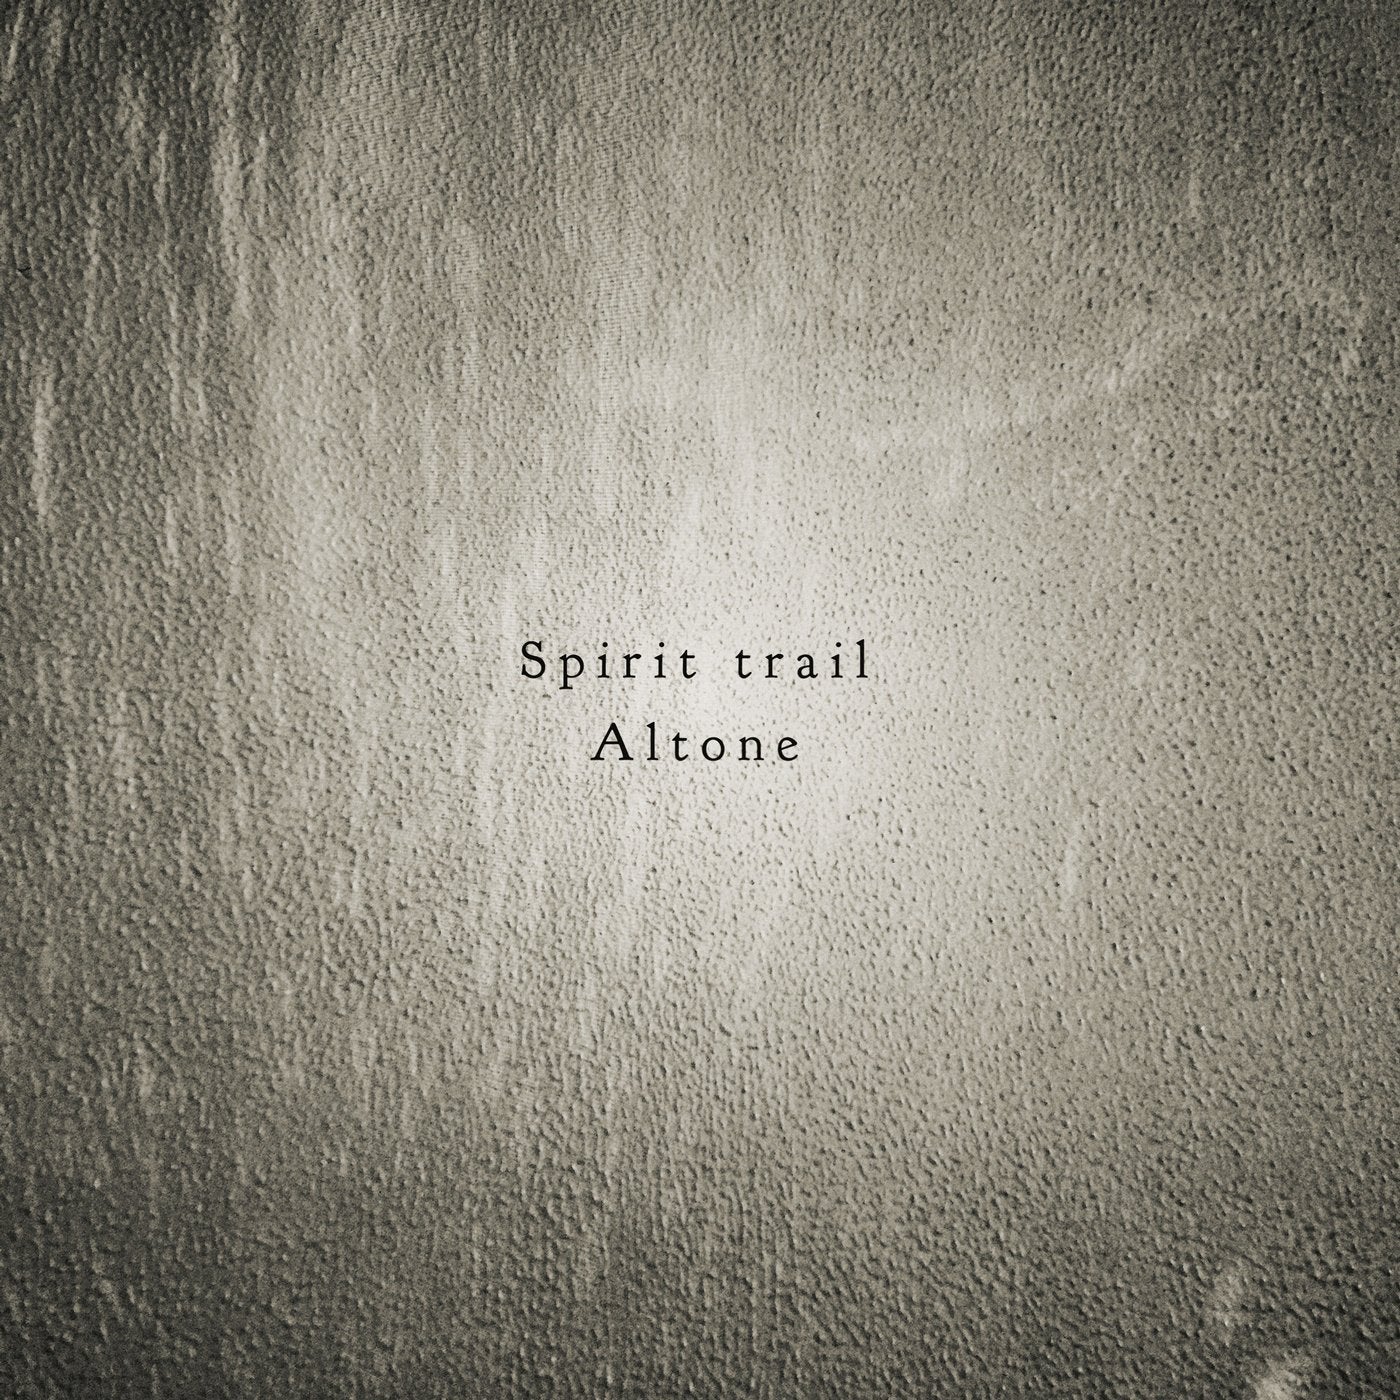 Spirit trail